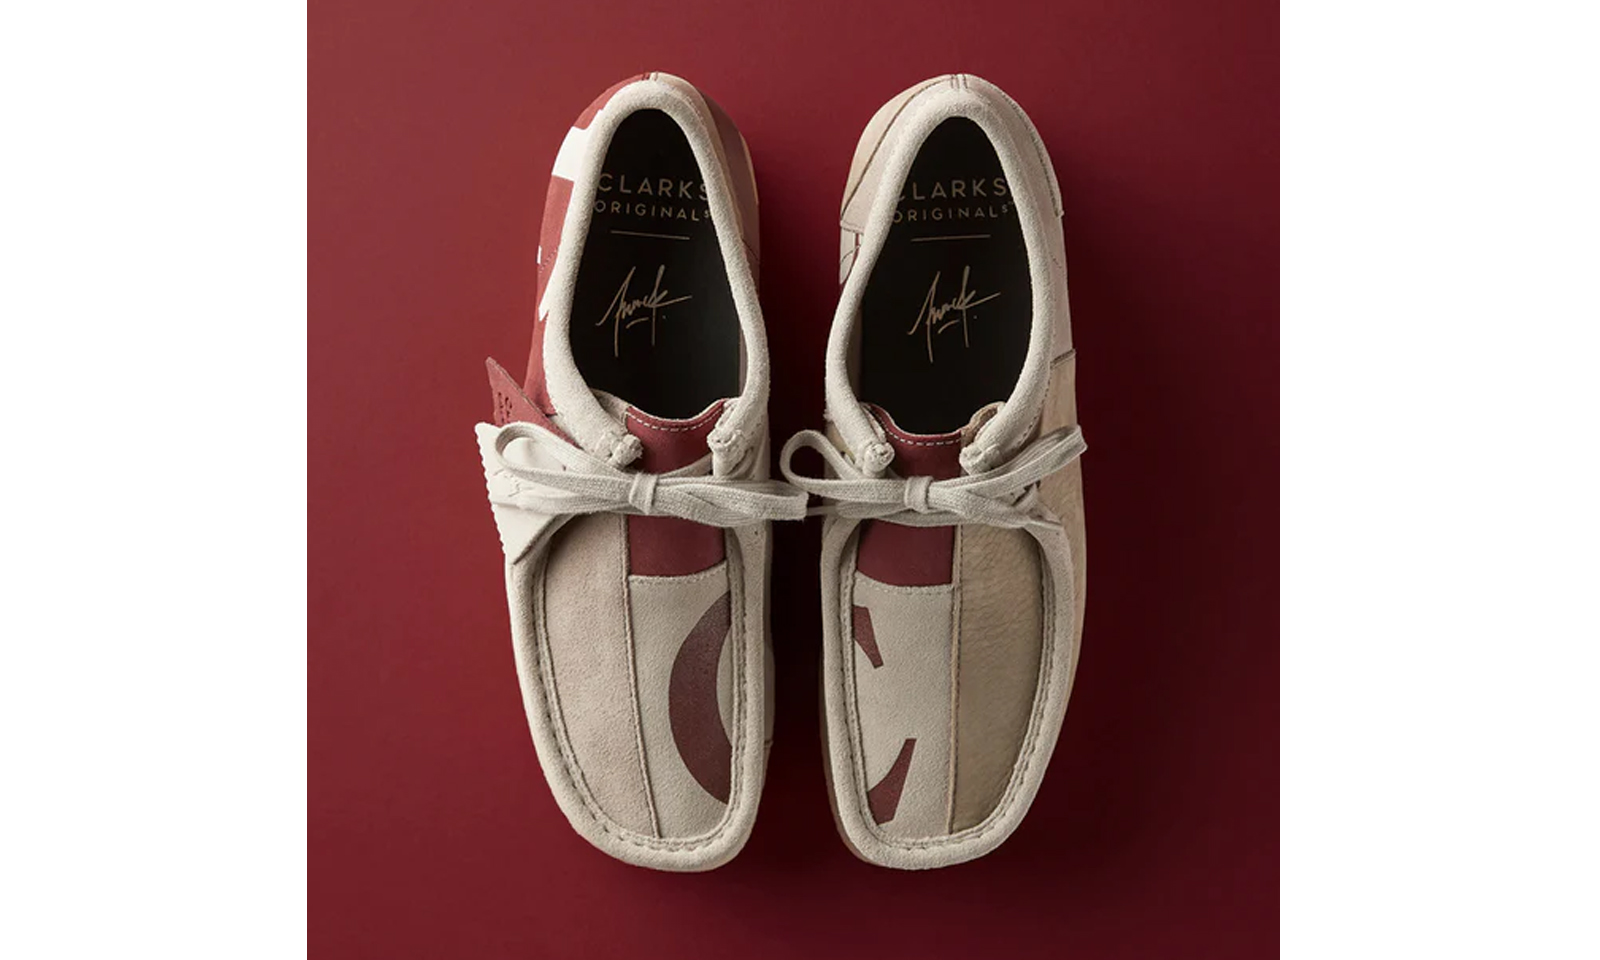 Franck Pellegrino x Clarks Wallabee「Red Combi」合作鞋款即将发售